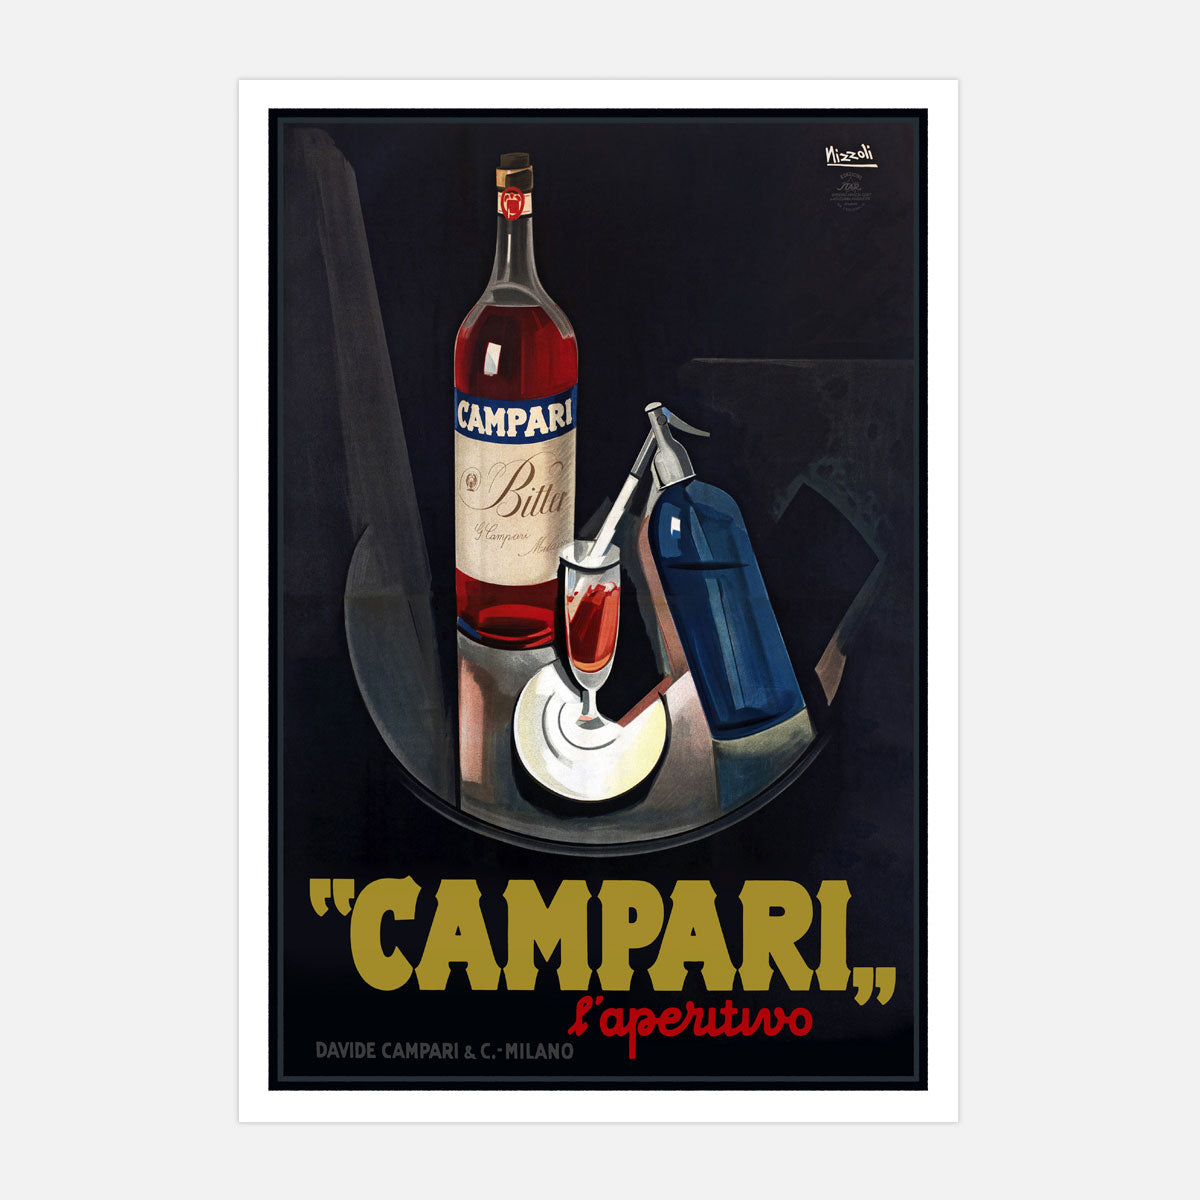 Campari l'aperitivo retro vintage poster print from Paces We Luv